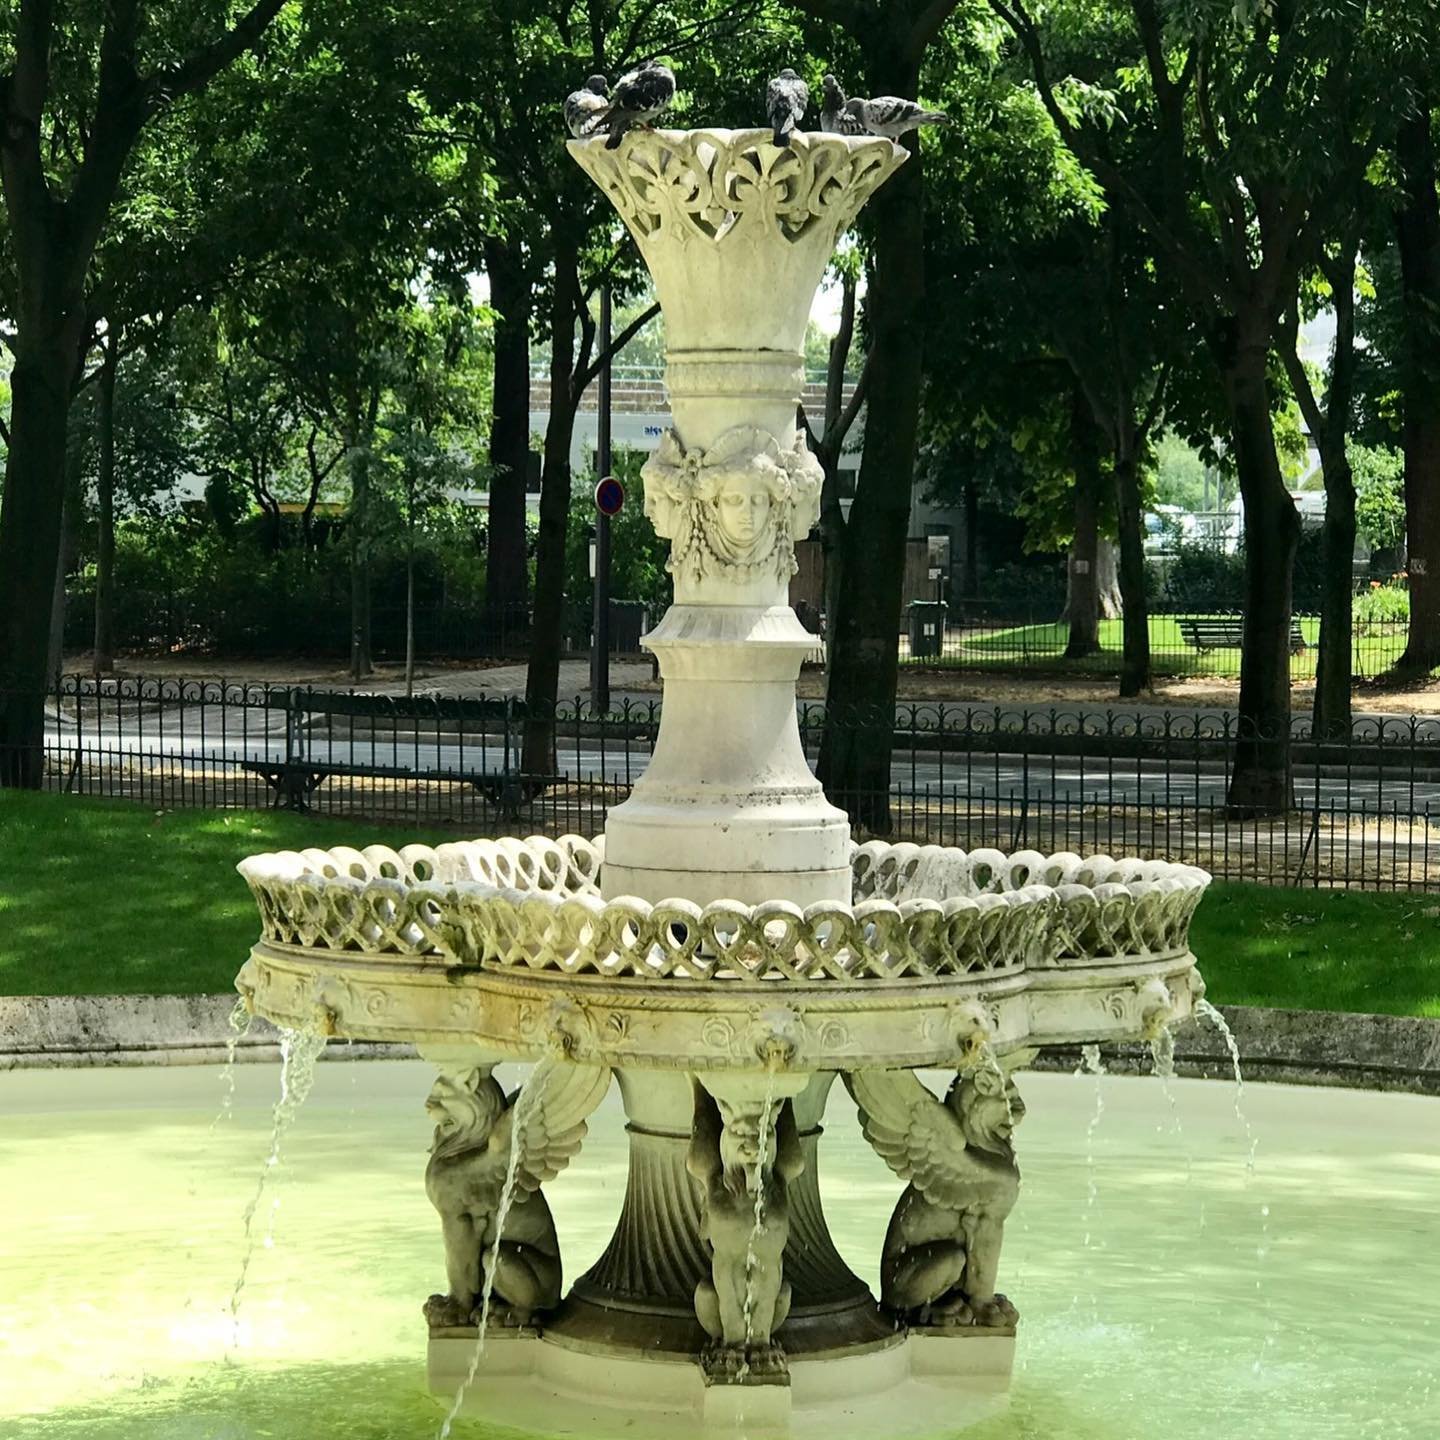 Place-Salvatore-Allende-Fountain.jpg.jpg